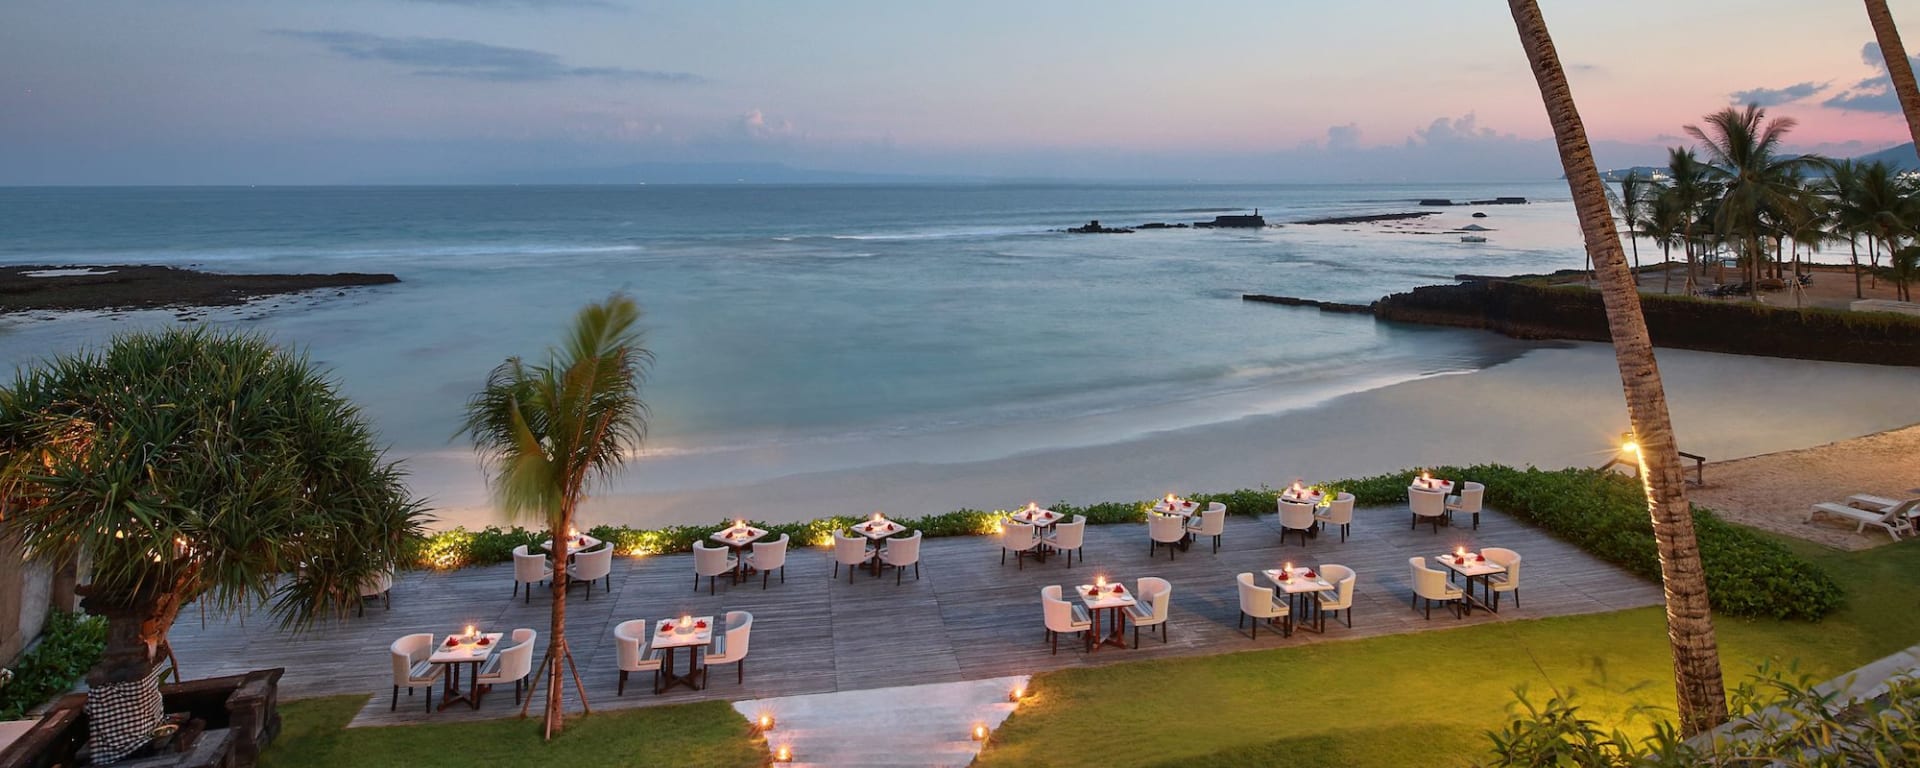 Candi Beach Resort & Spa in Ostbali: Biru Restaurant